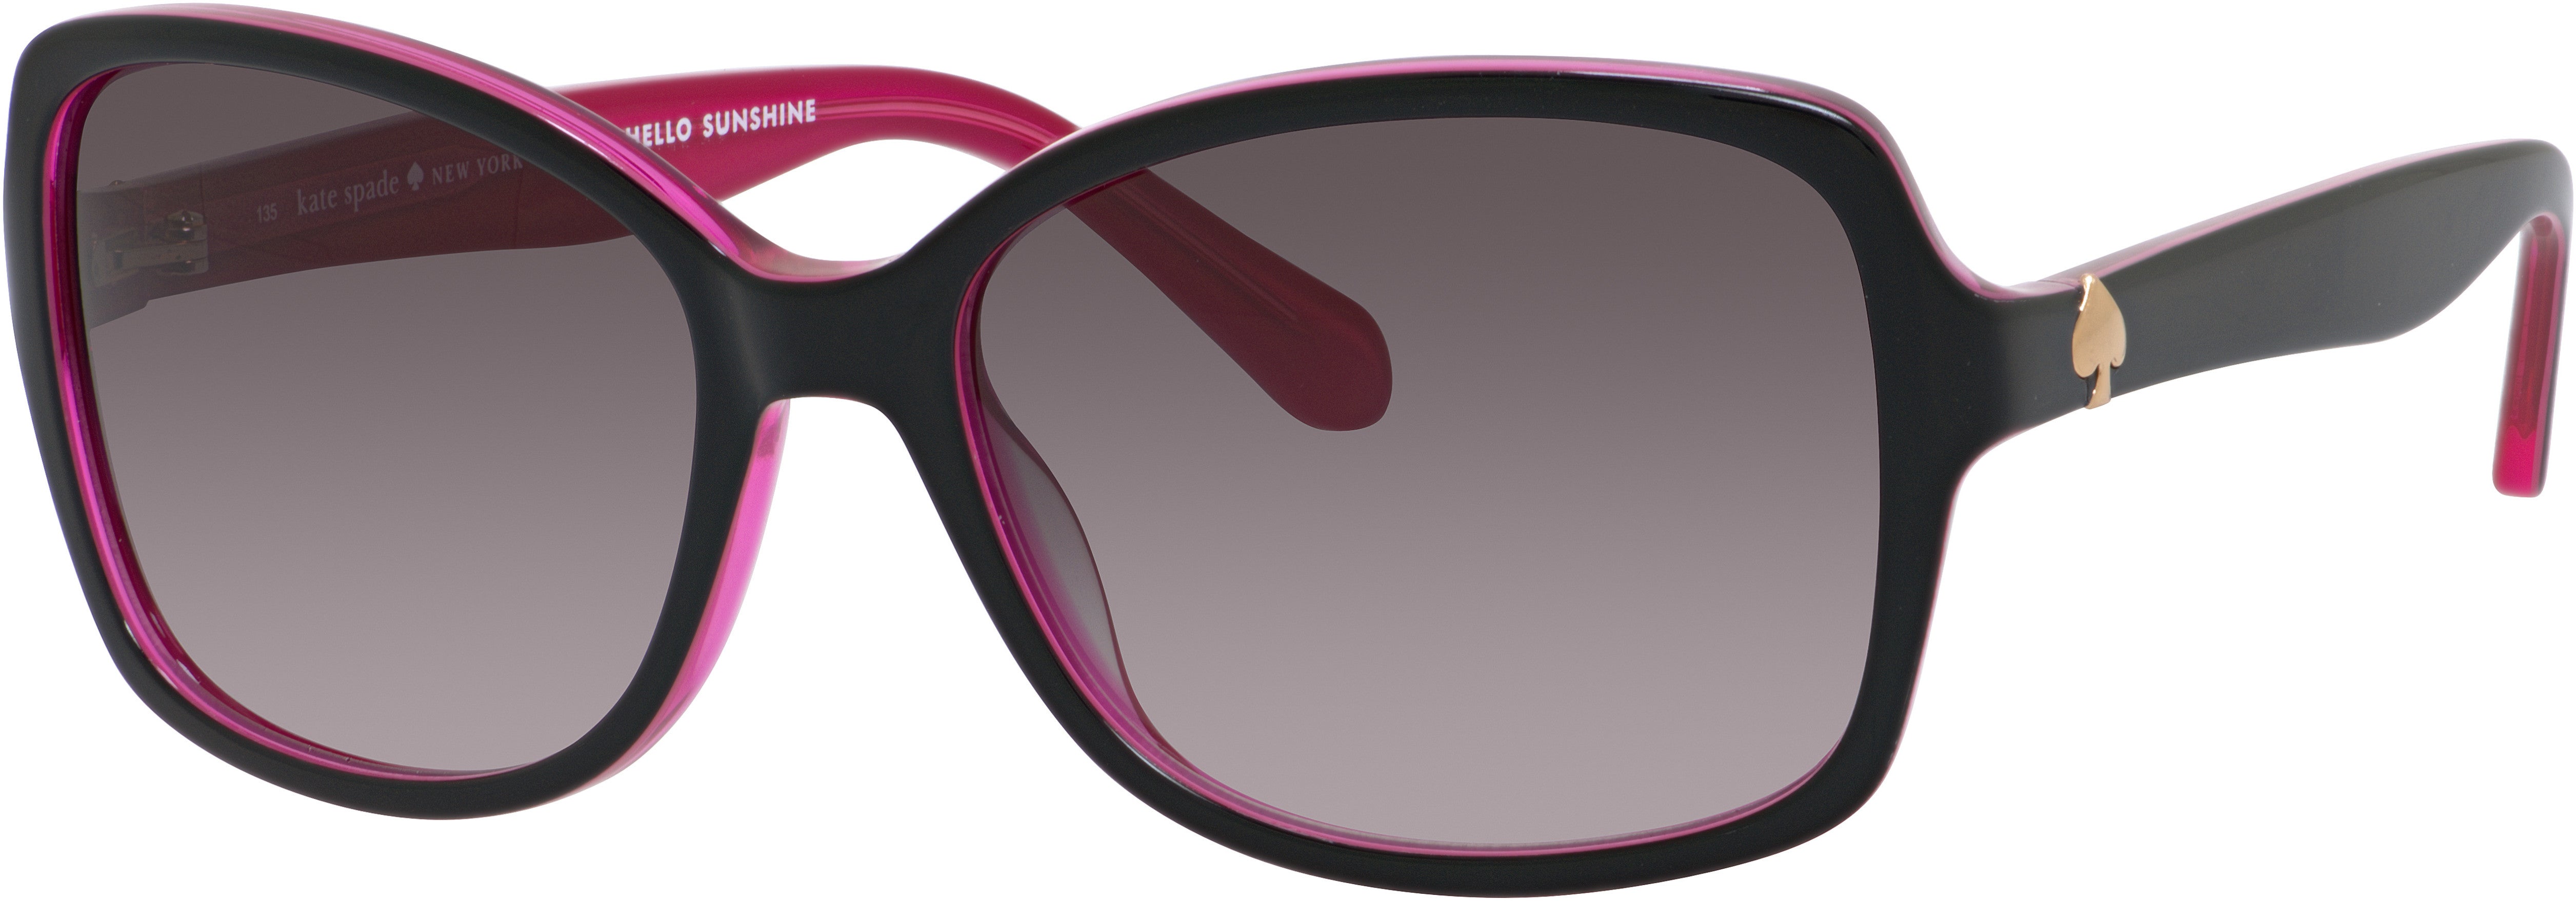 Kate Spade Ayleen/S Rectangular Sunglasses 0S27-0S27  Black Pink (N6 Gray Gradient)